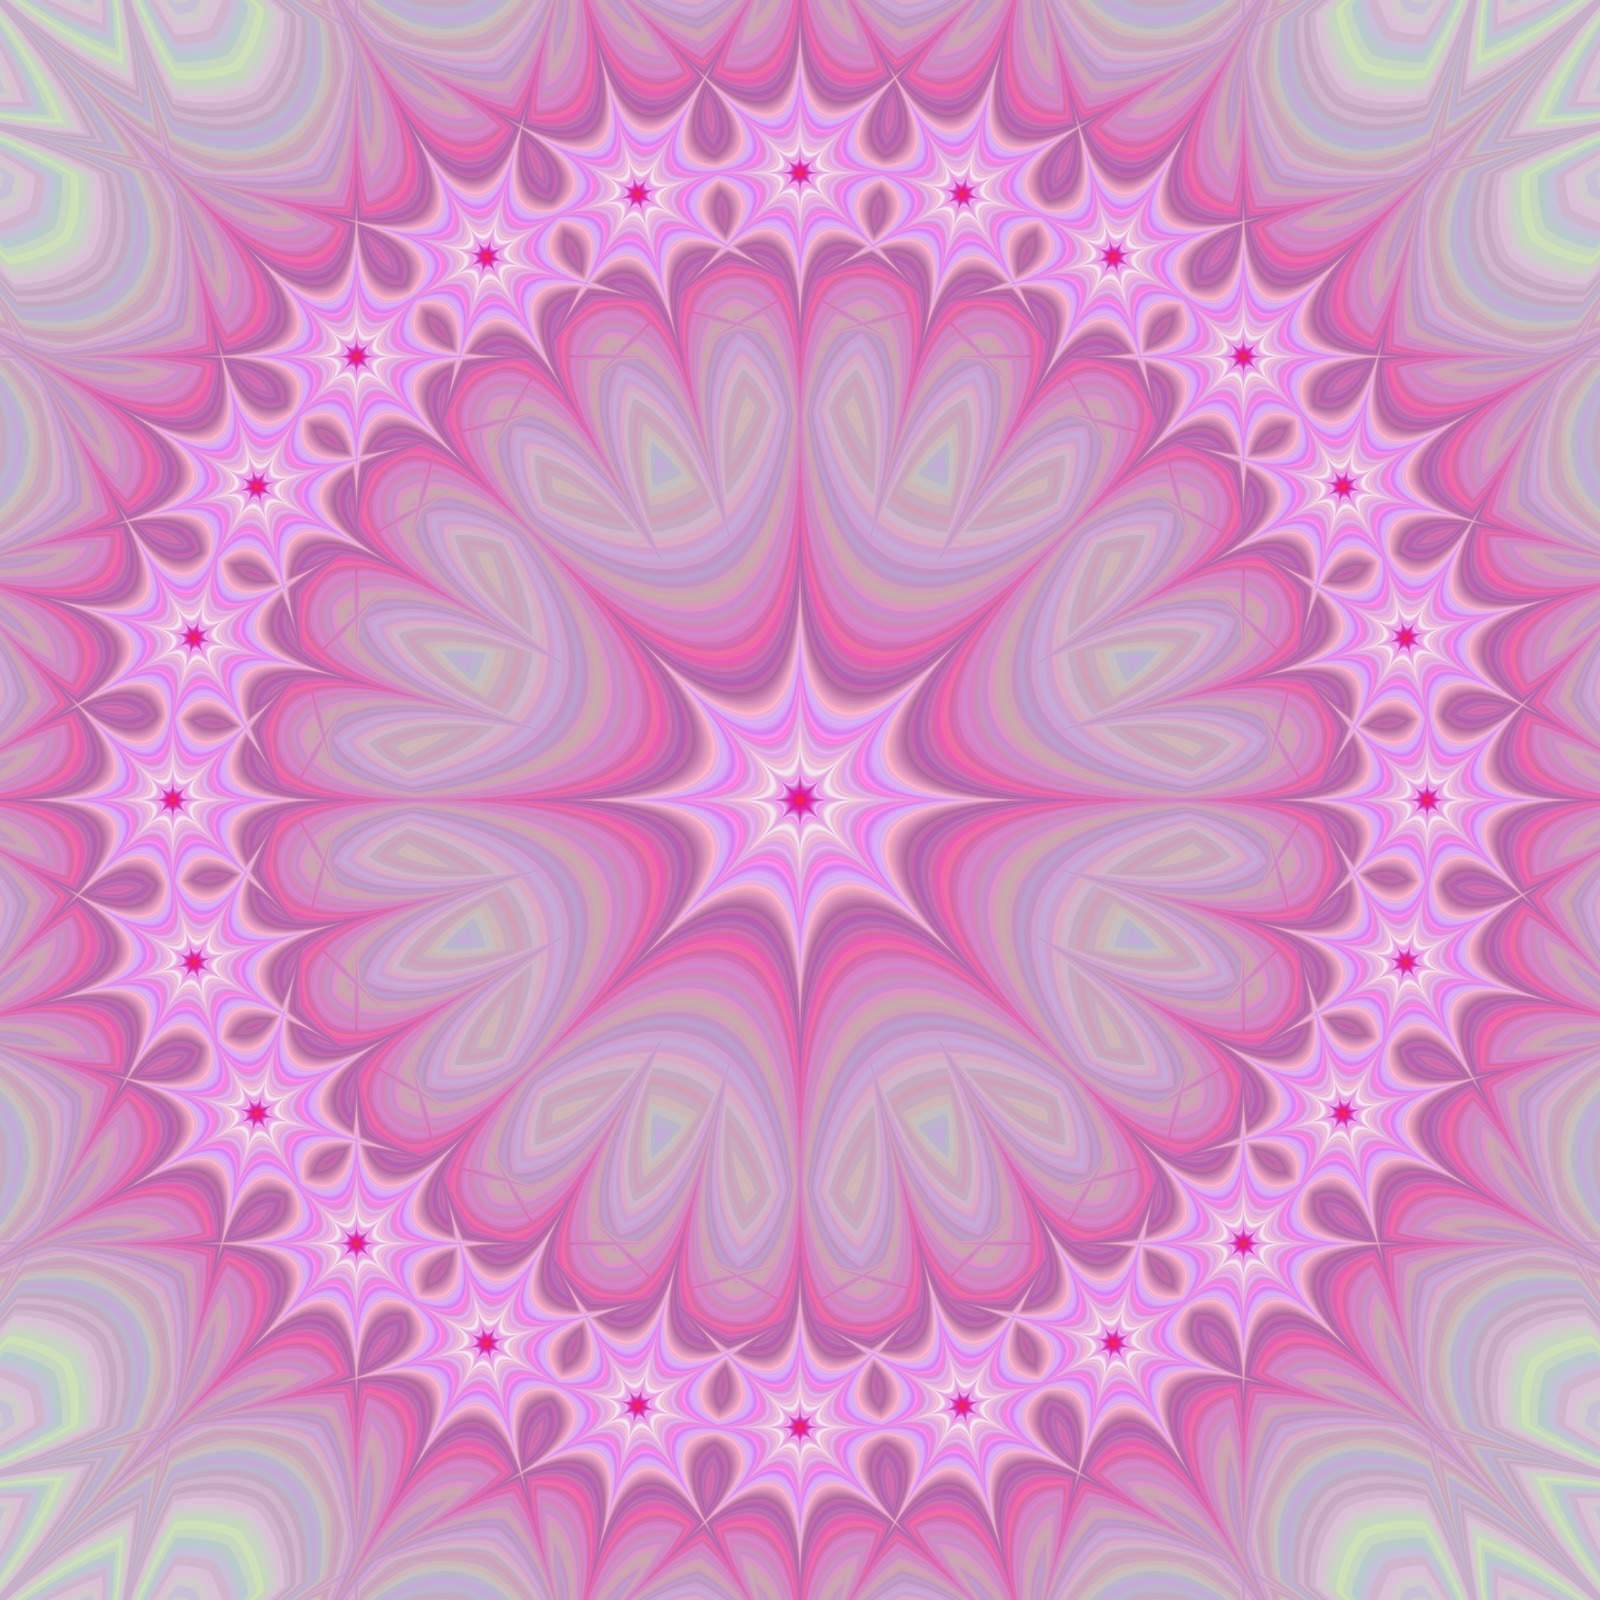 Pink girly mandala flower fractal design background